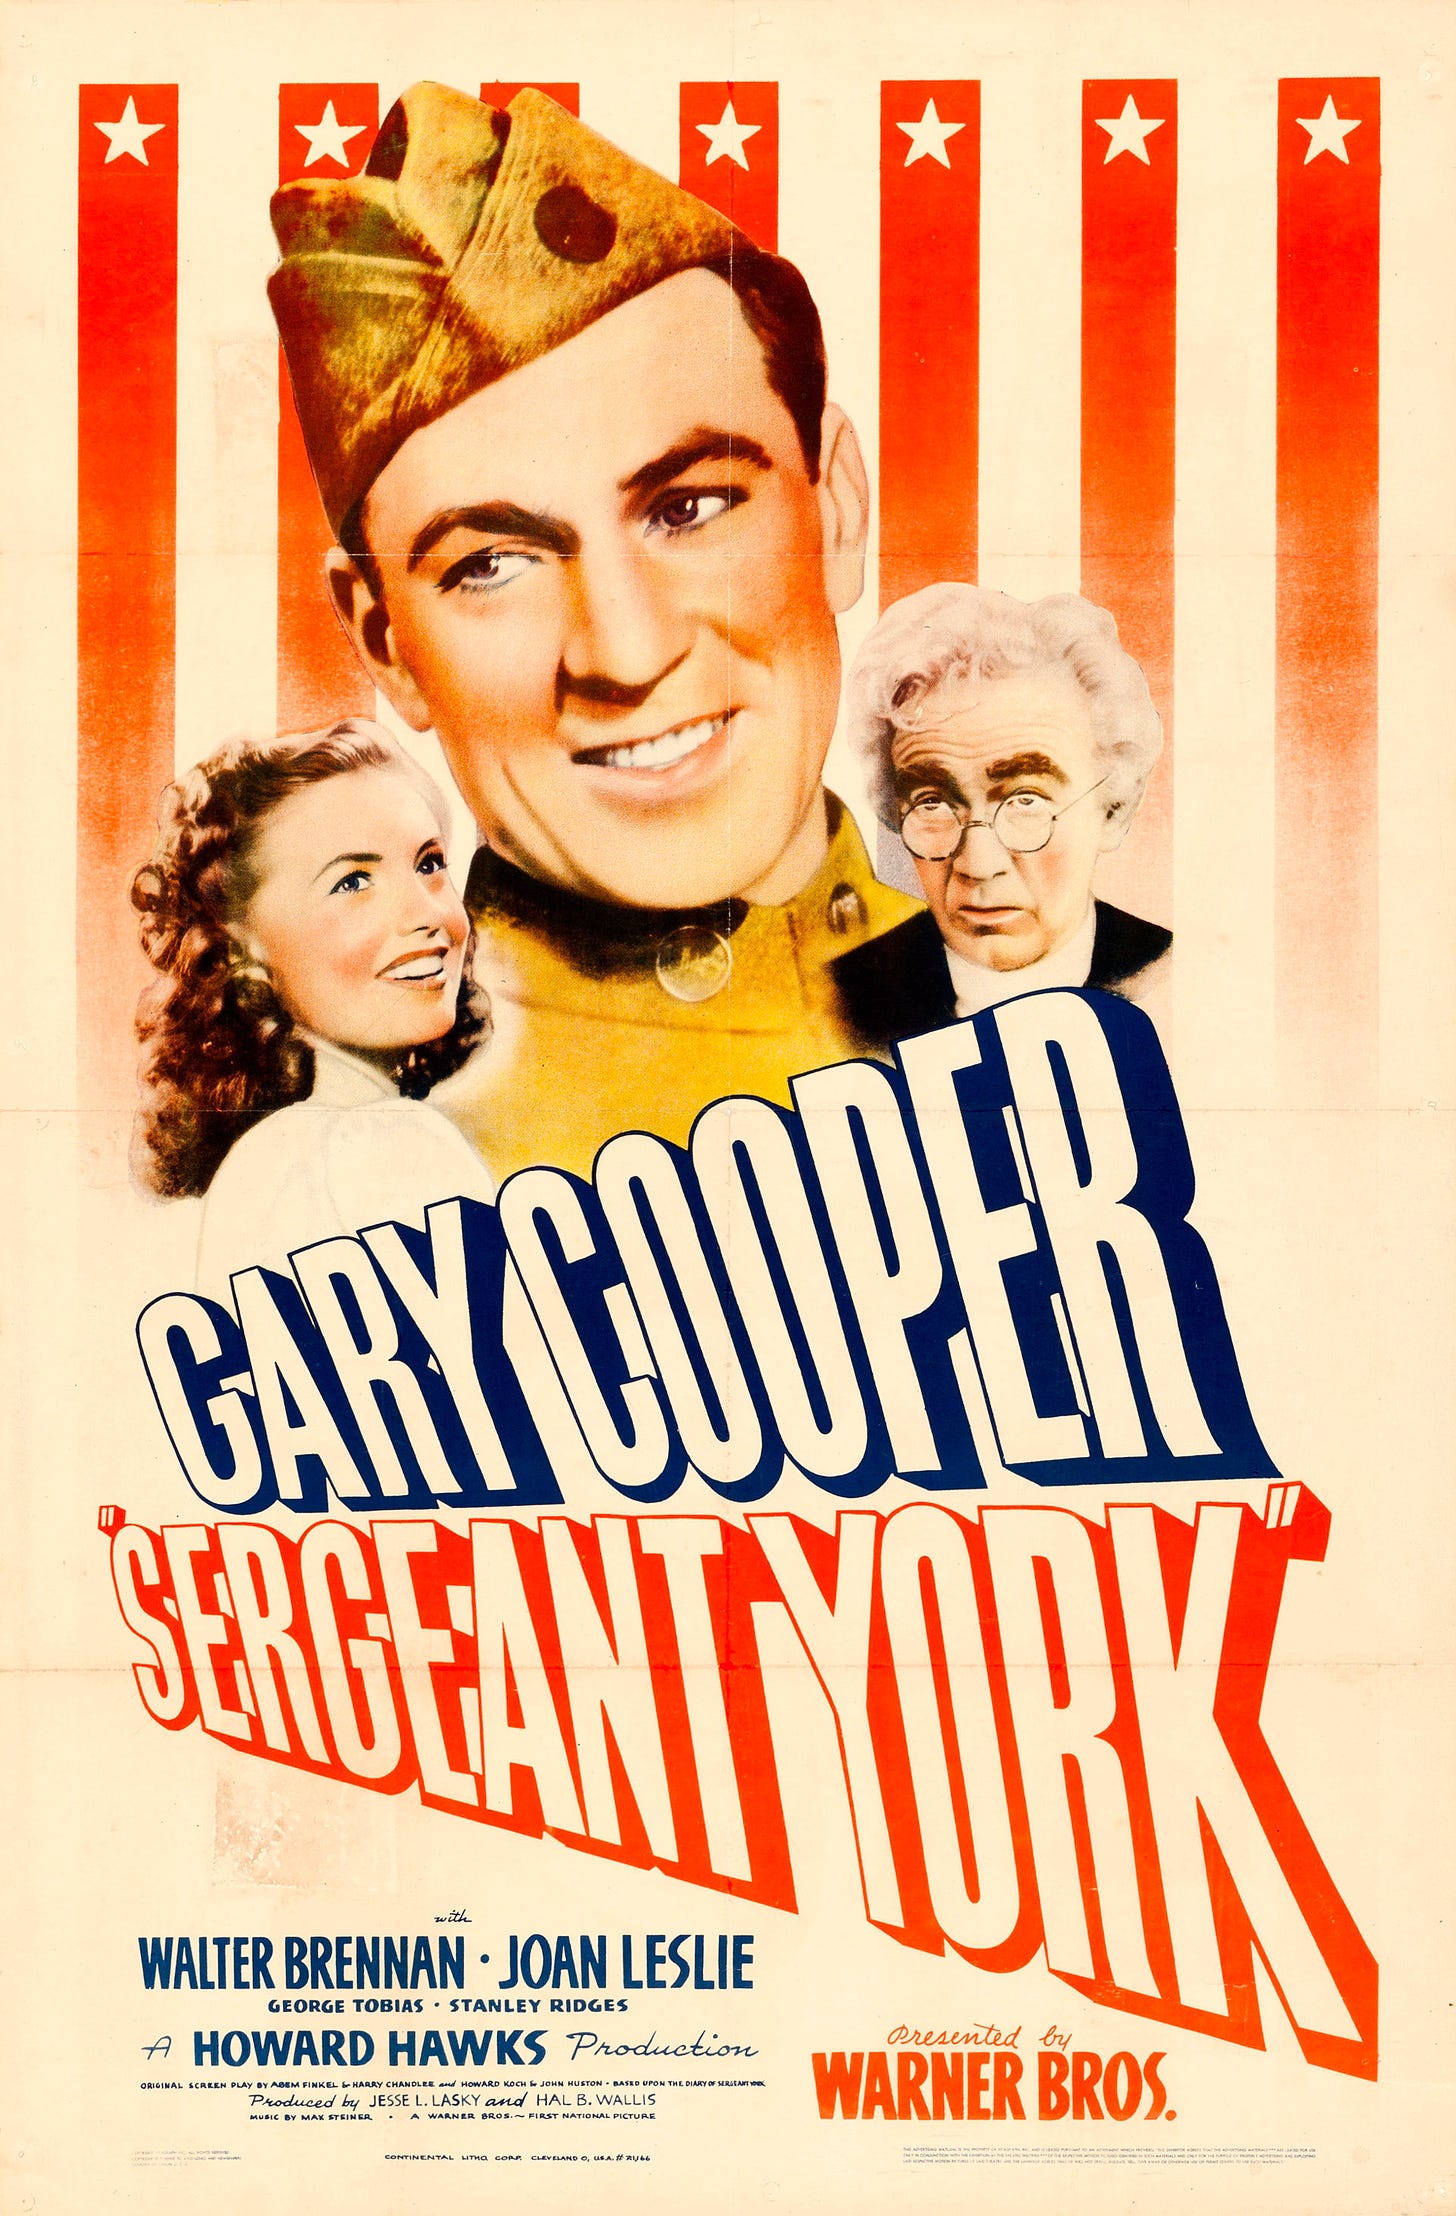 Sergeant York (film) - Wikipedia